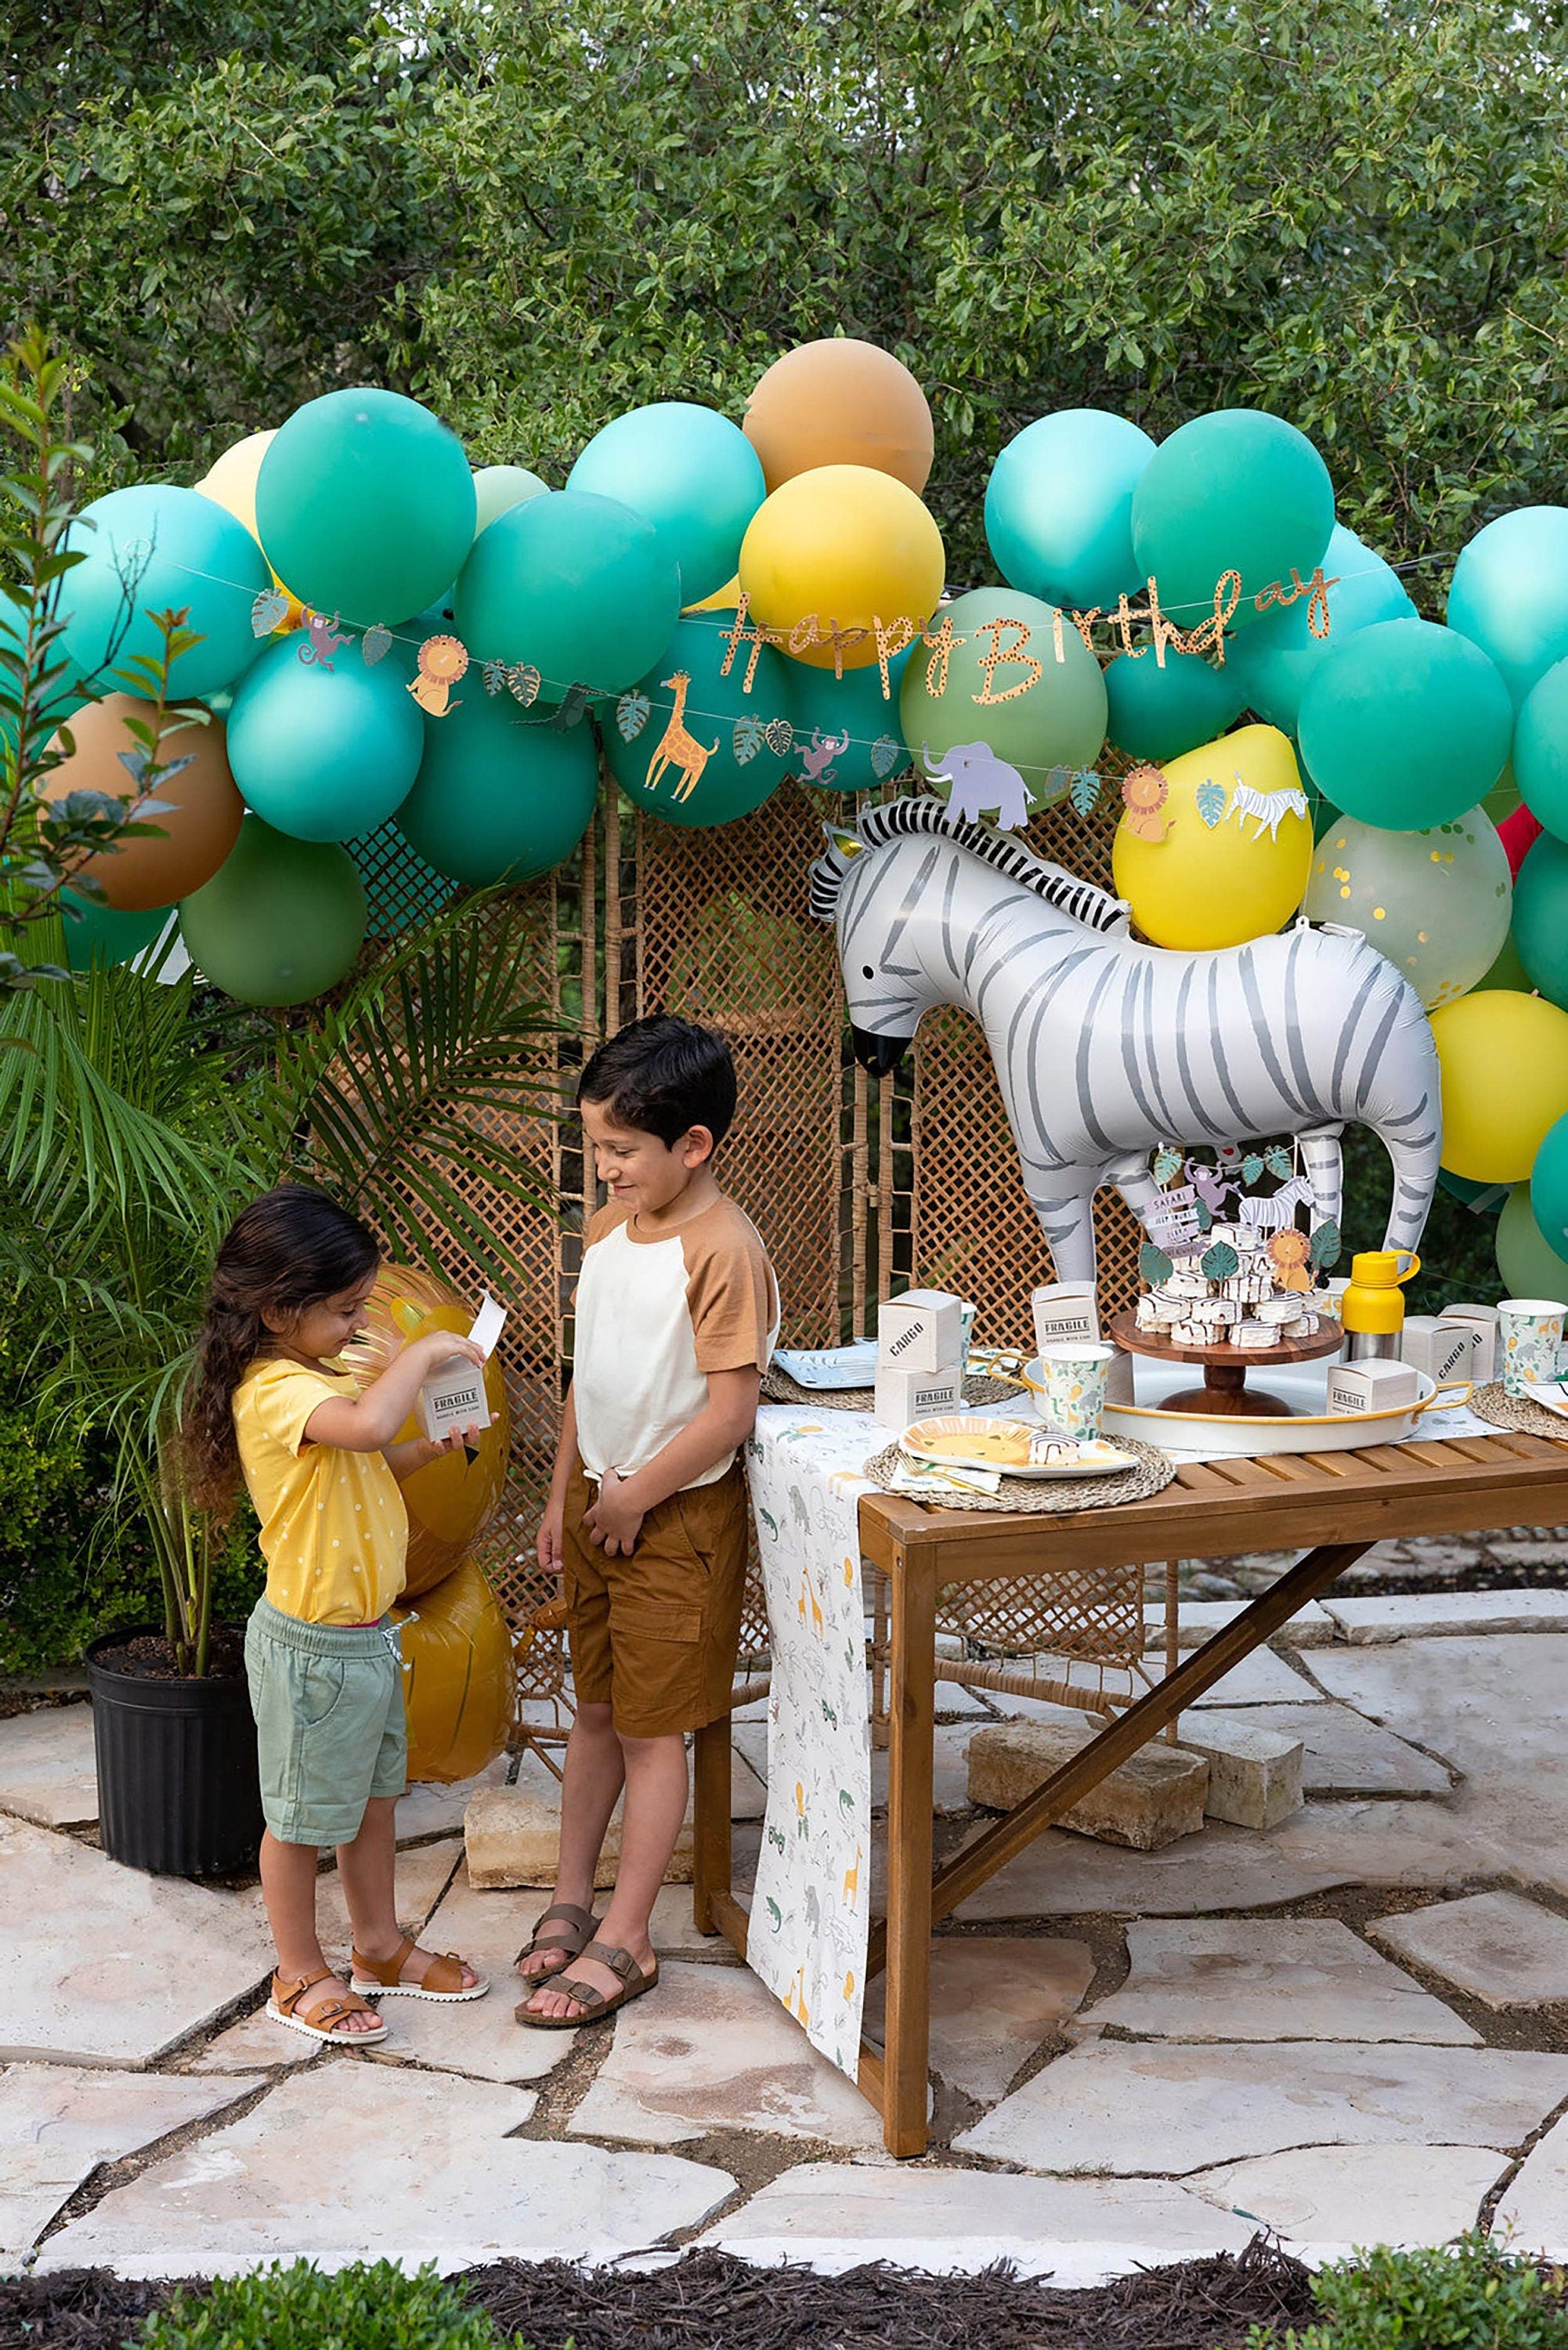 Safari Party Decorations | Safari Birthday Party Decorations - Safari Party - Safari Birthday Party - Adventure Party - Wild One Birthday